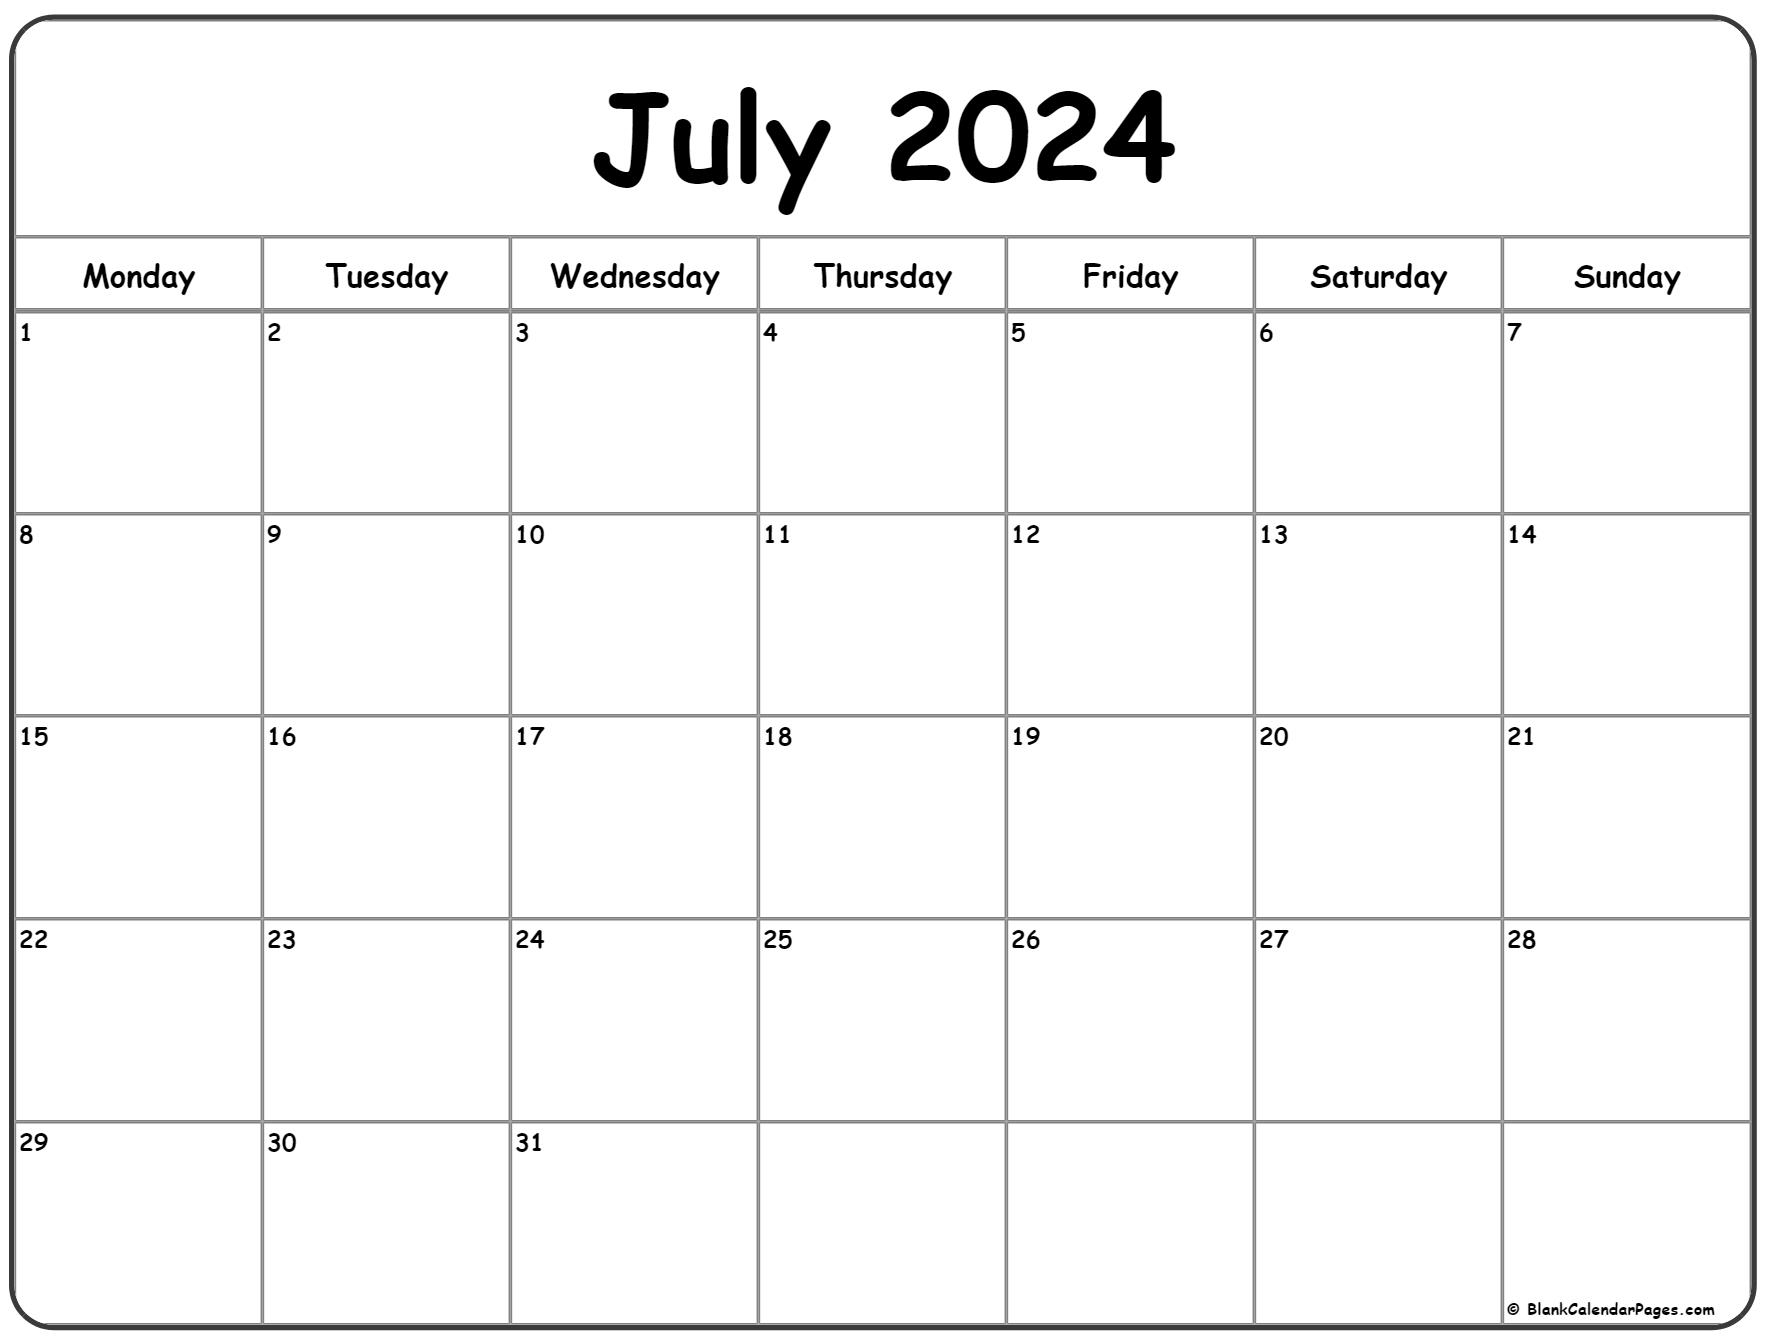 July 2024 Monday Calendar | Monday To Sunday for July 2024 Printable Calendar